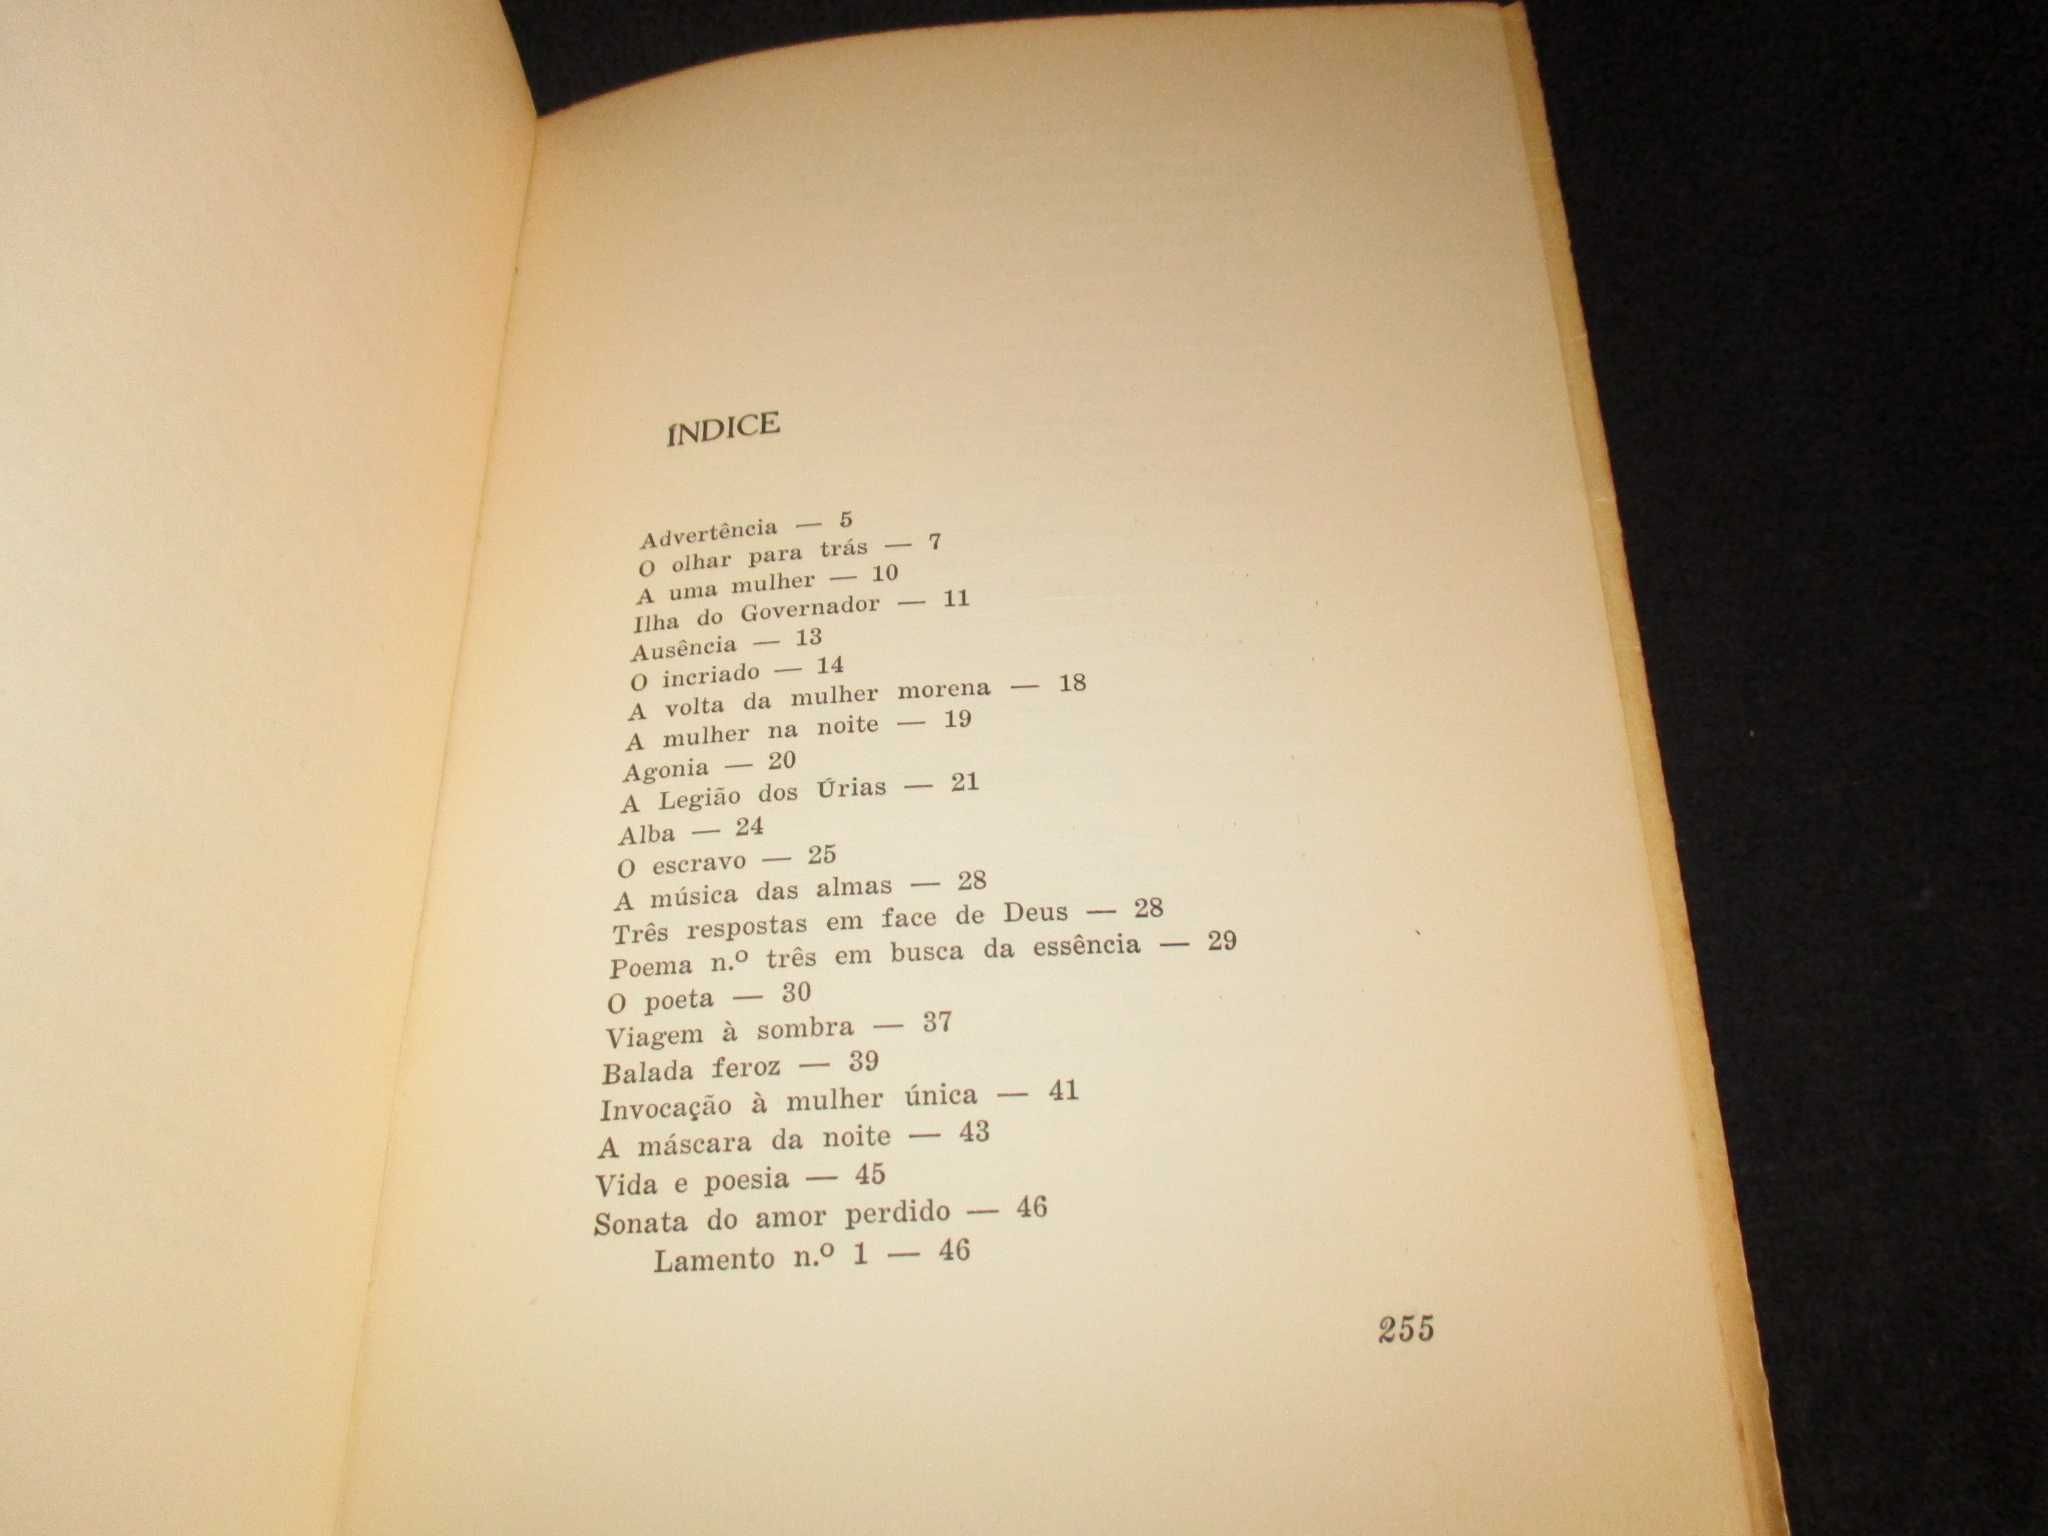 Livro Antologia Poética Vinicius de Moraes numerado